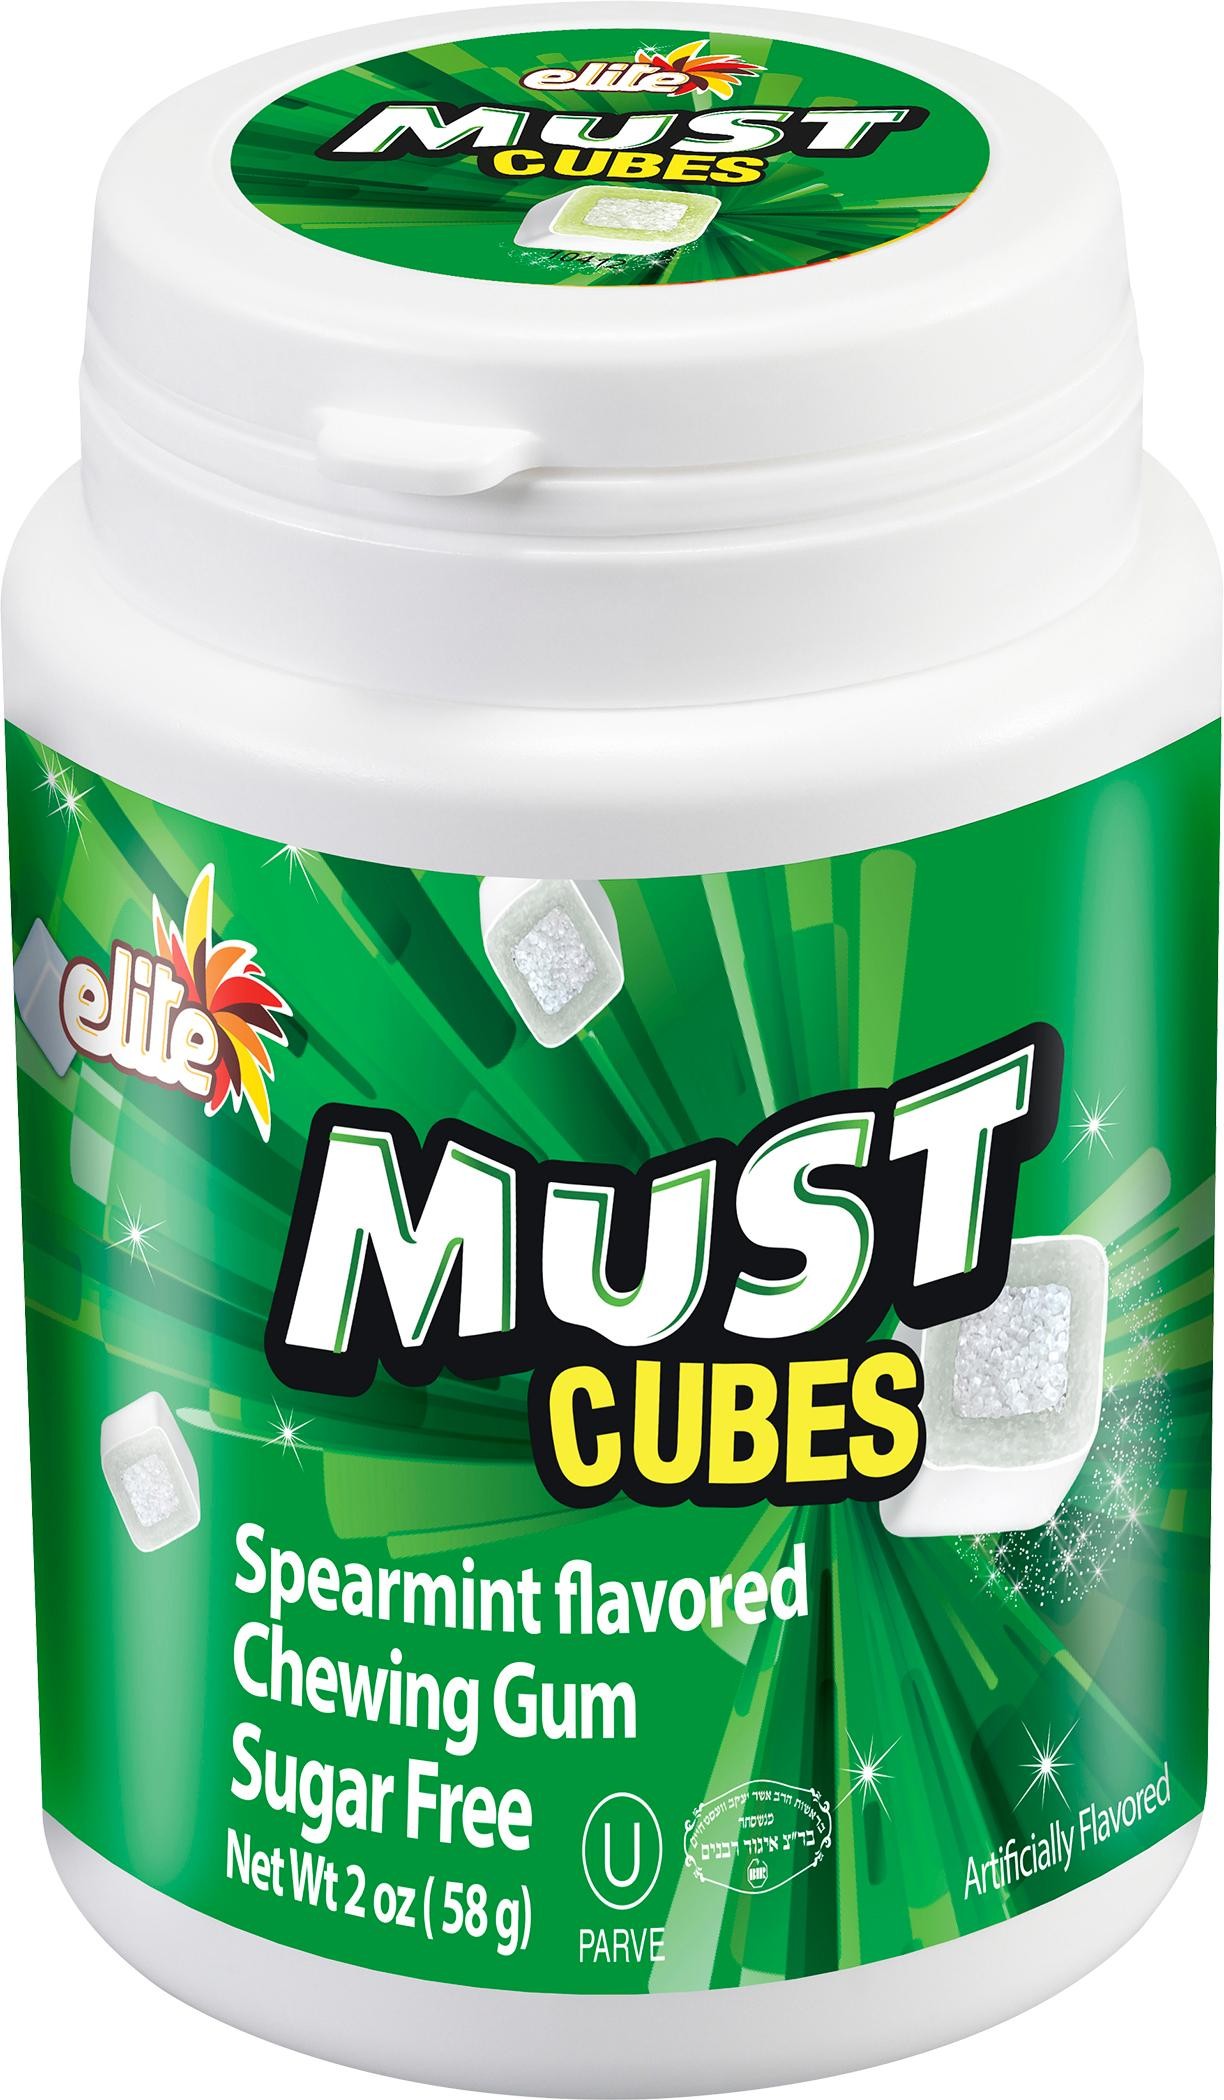 KHRM02301124 2 Oz Must Cubes Spearmint Flavored Sugar Fee Chewing Gum